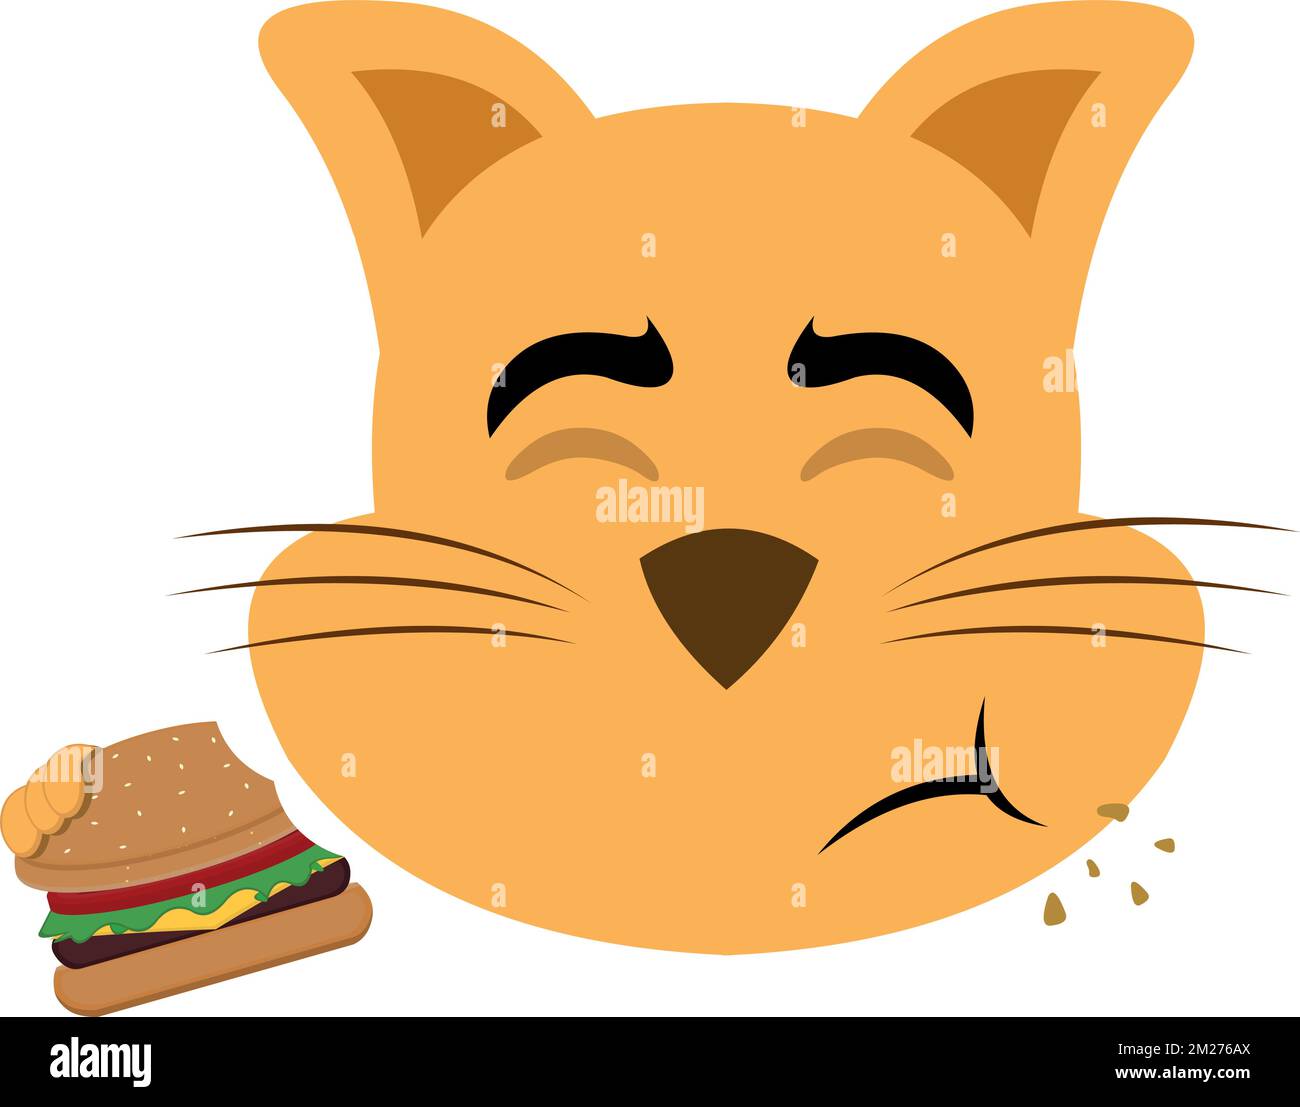 vector illustration of the face of a cartoon cat eating a hamburger Stock Vector